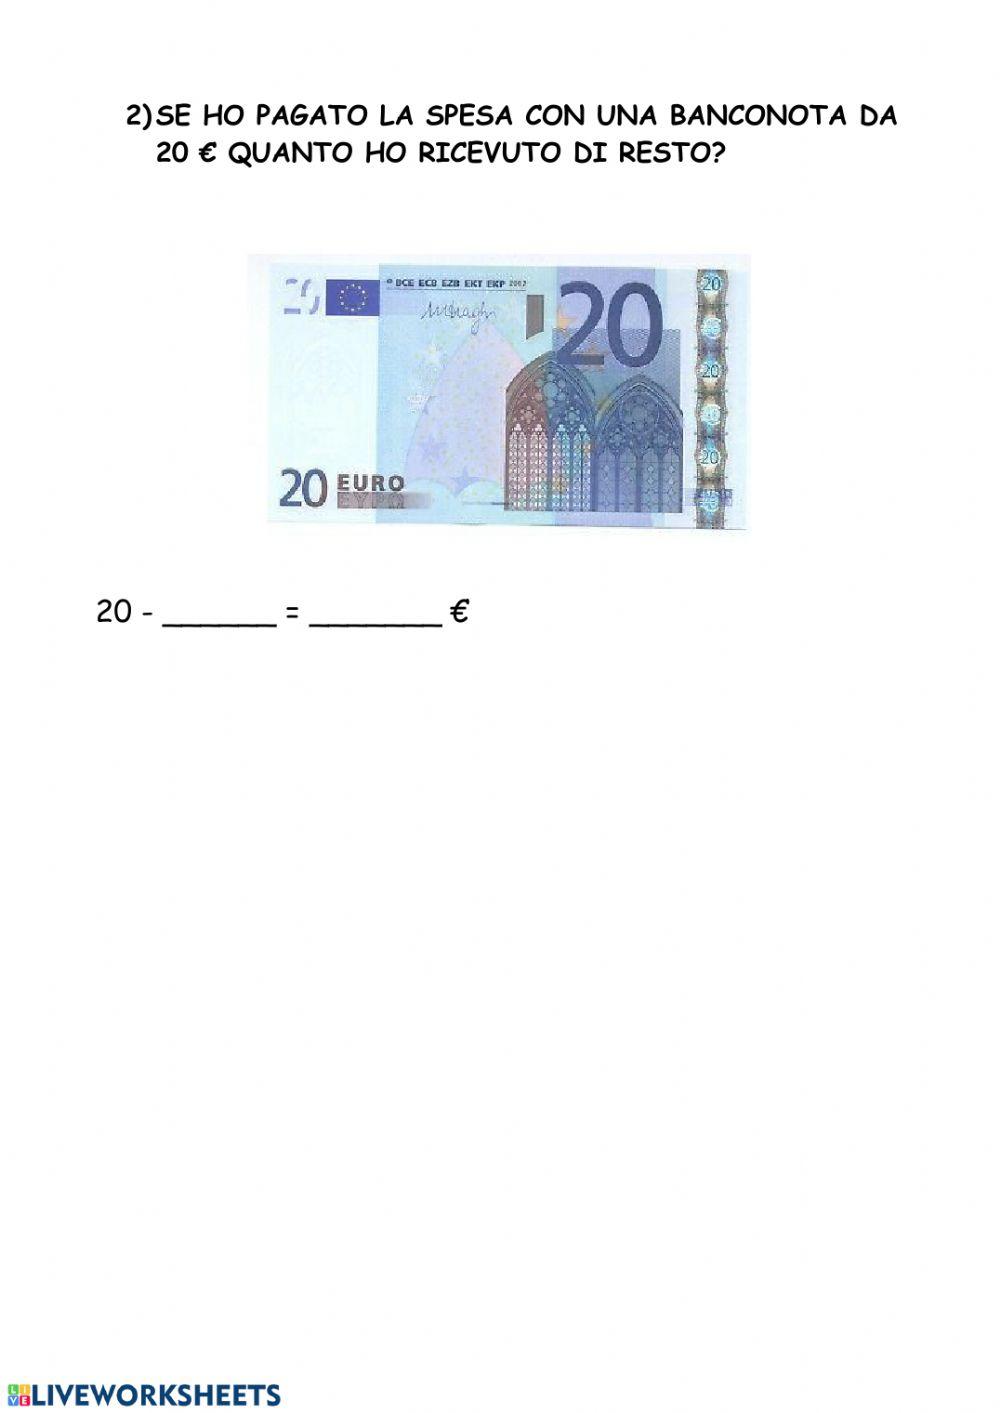 La spesa in euro